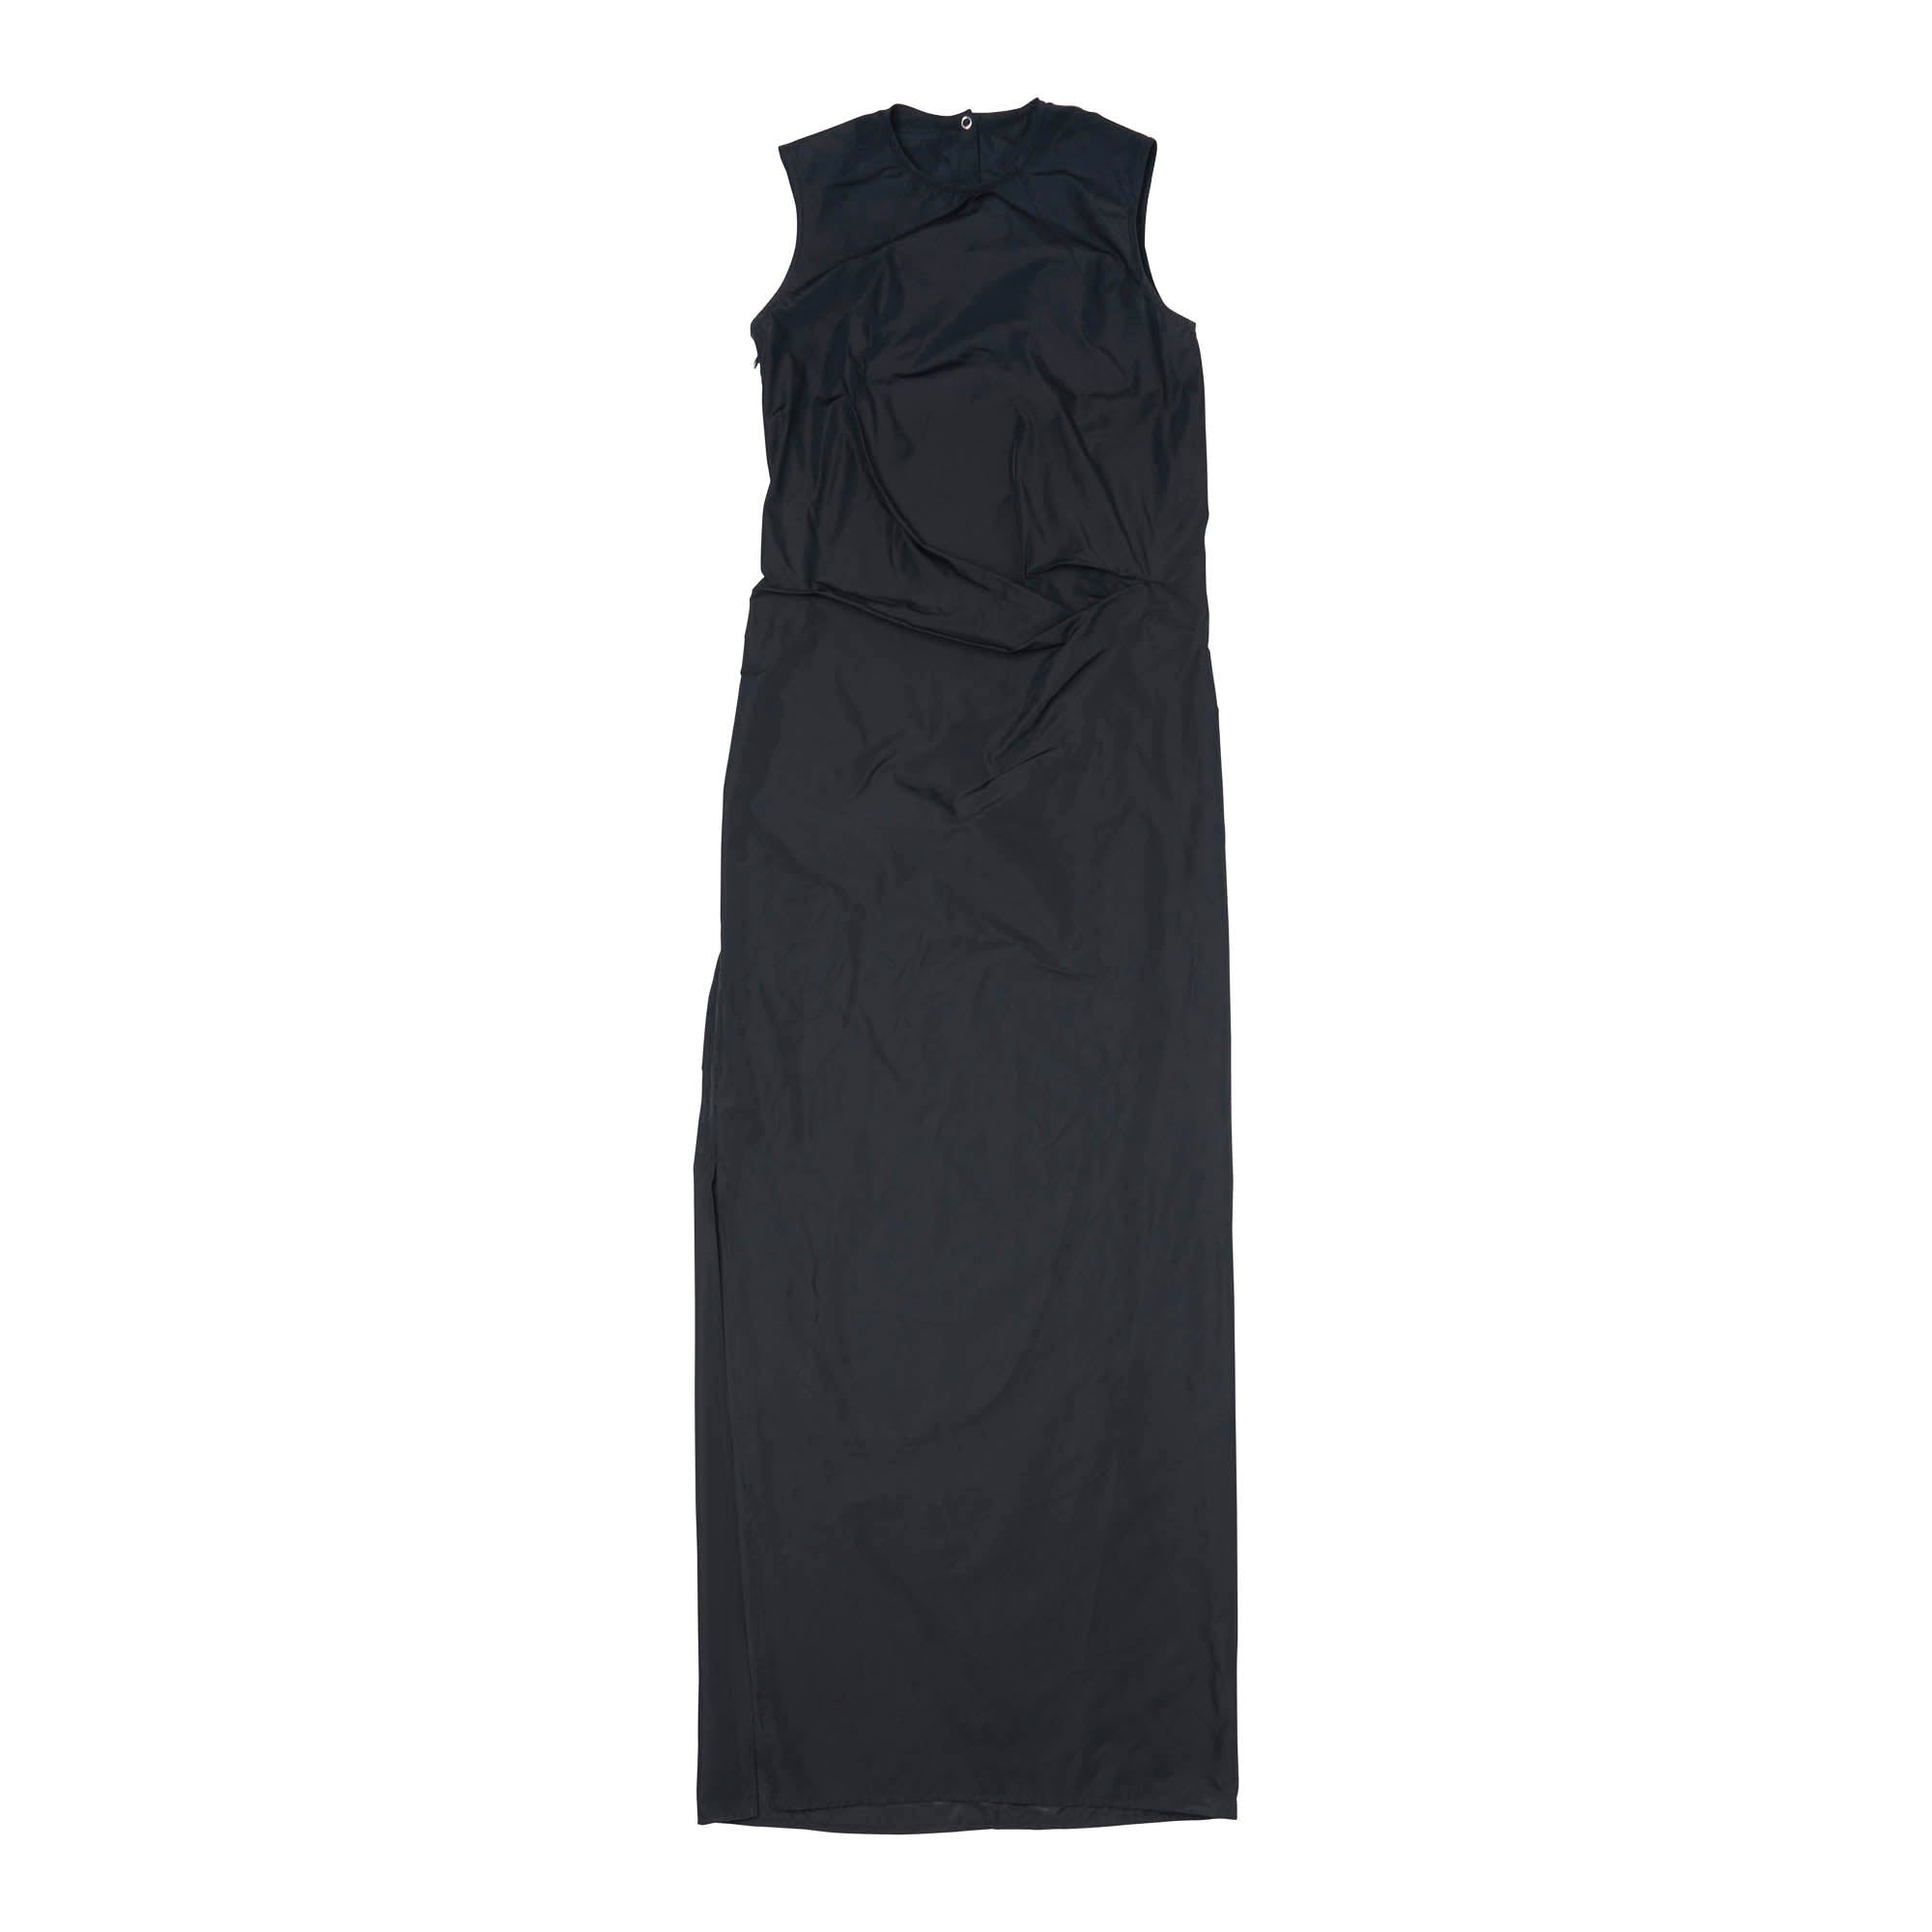 Full Length Drape Dress Radzimir Black - PREORDER